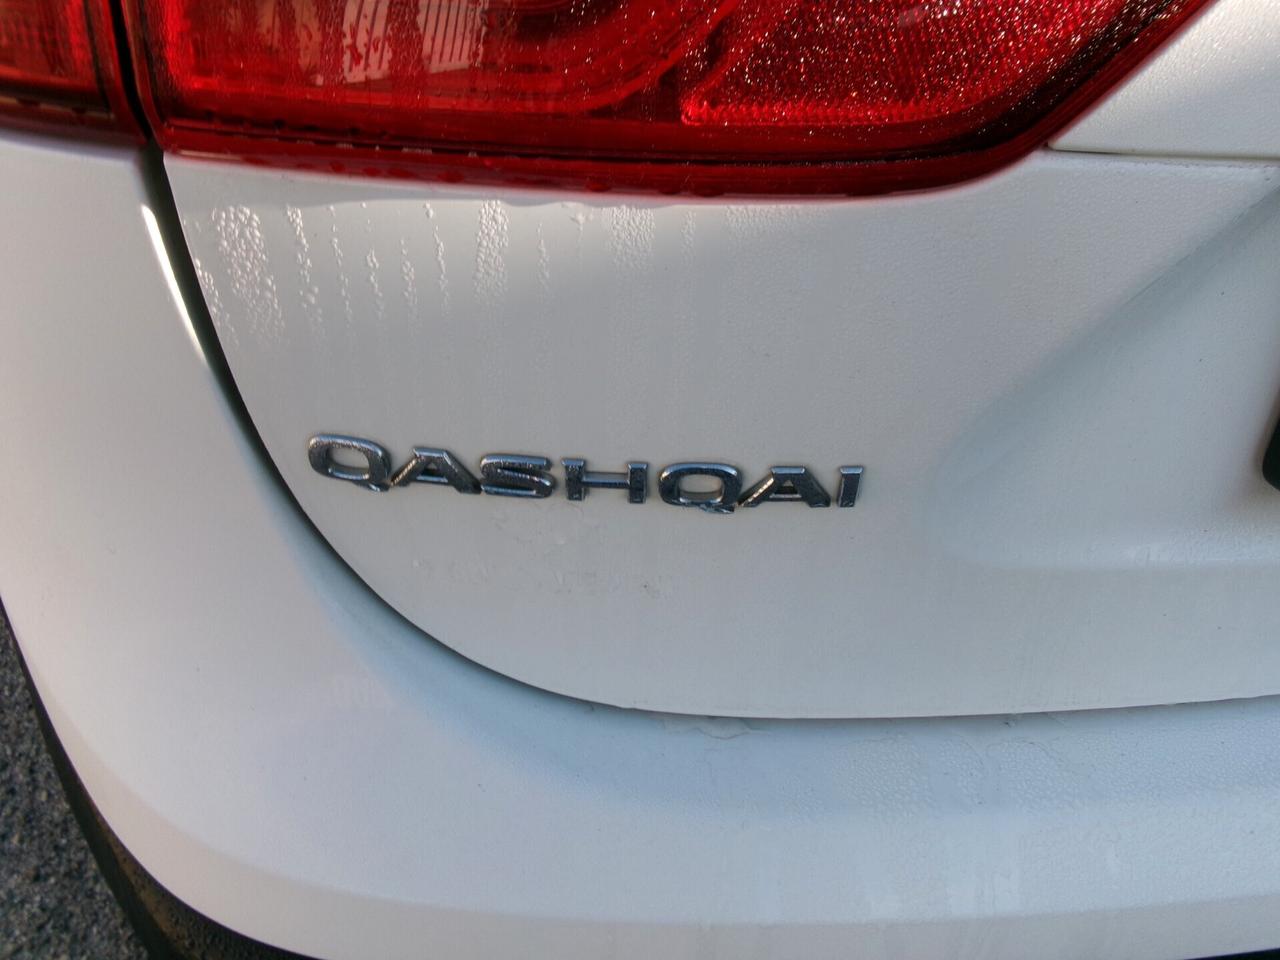 Nissan Qashqai 1.5 dCi super accessoriata